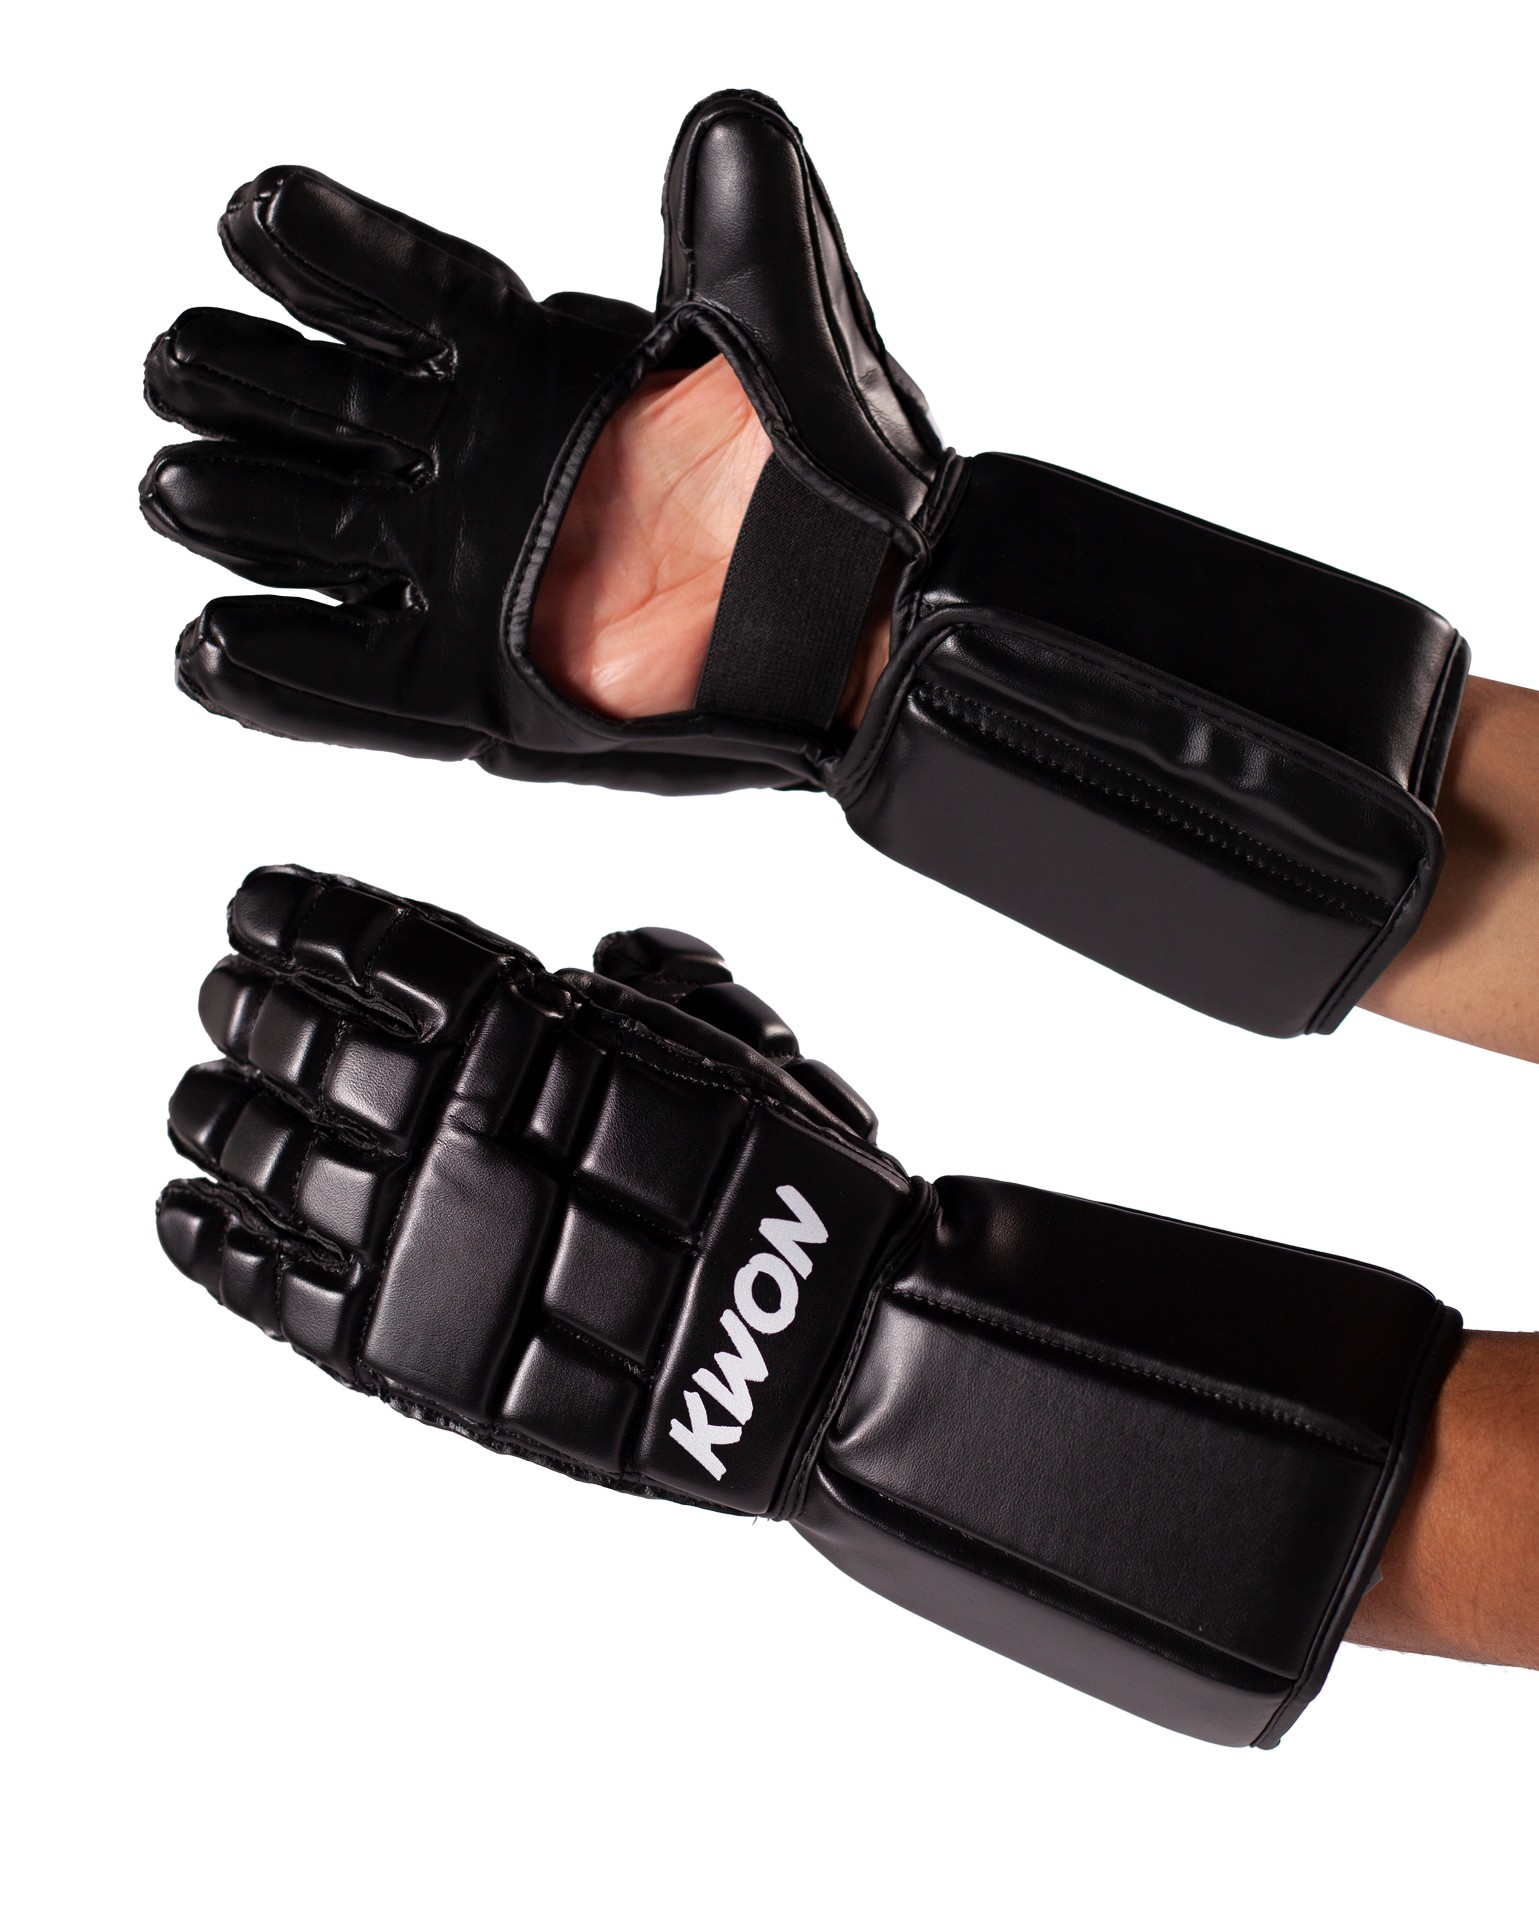 KWON Escrima Gloves Protection Forearm |